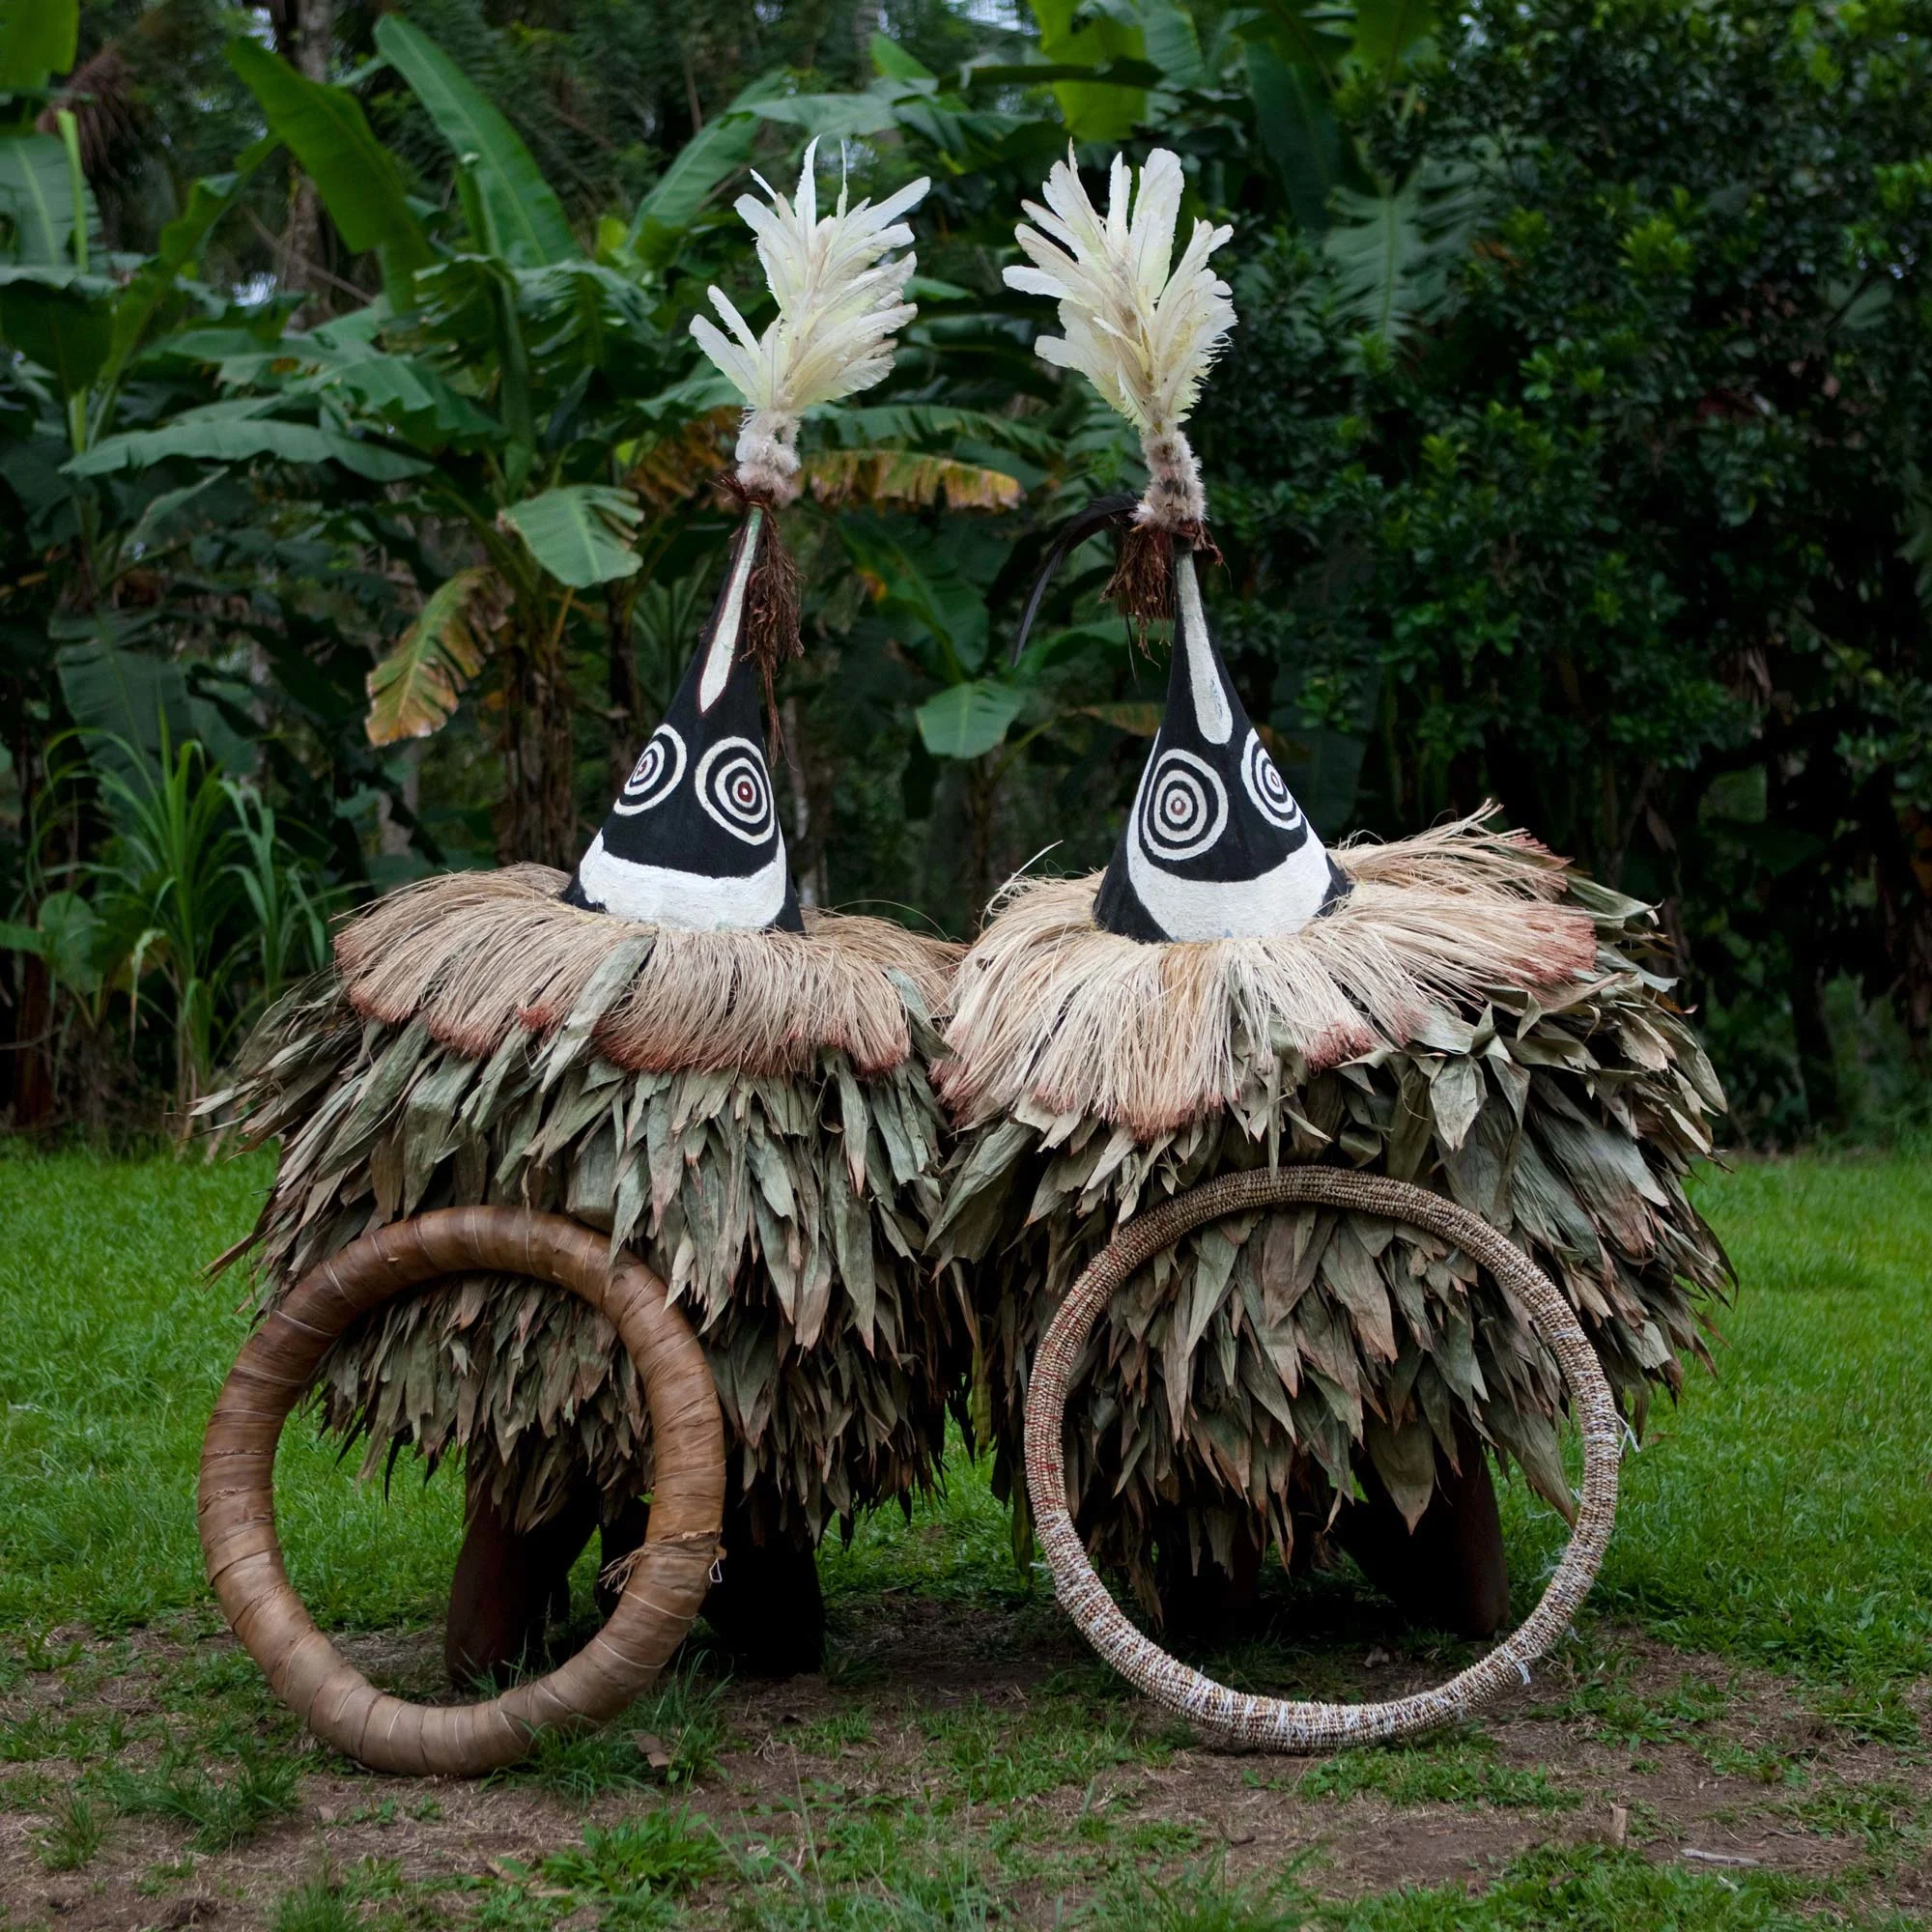 Tubuan Dance With Duk Duk Giant Masks, Rabaul, East New Britain, Papua New Guinea. ERIC LAFFORGUE / Alamy Stock Photo